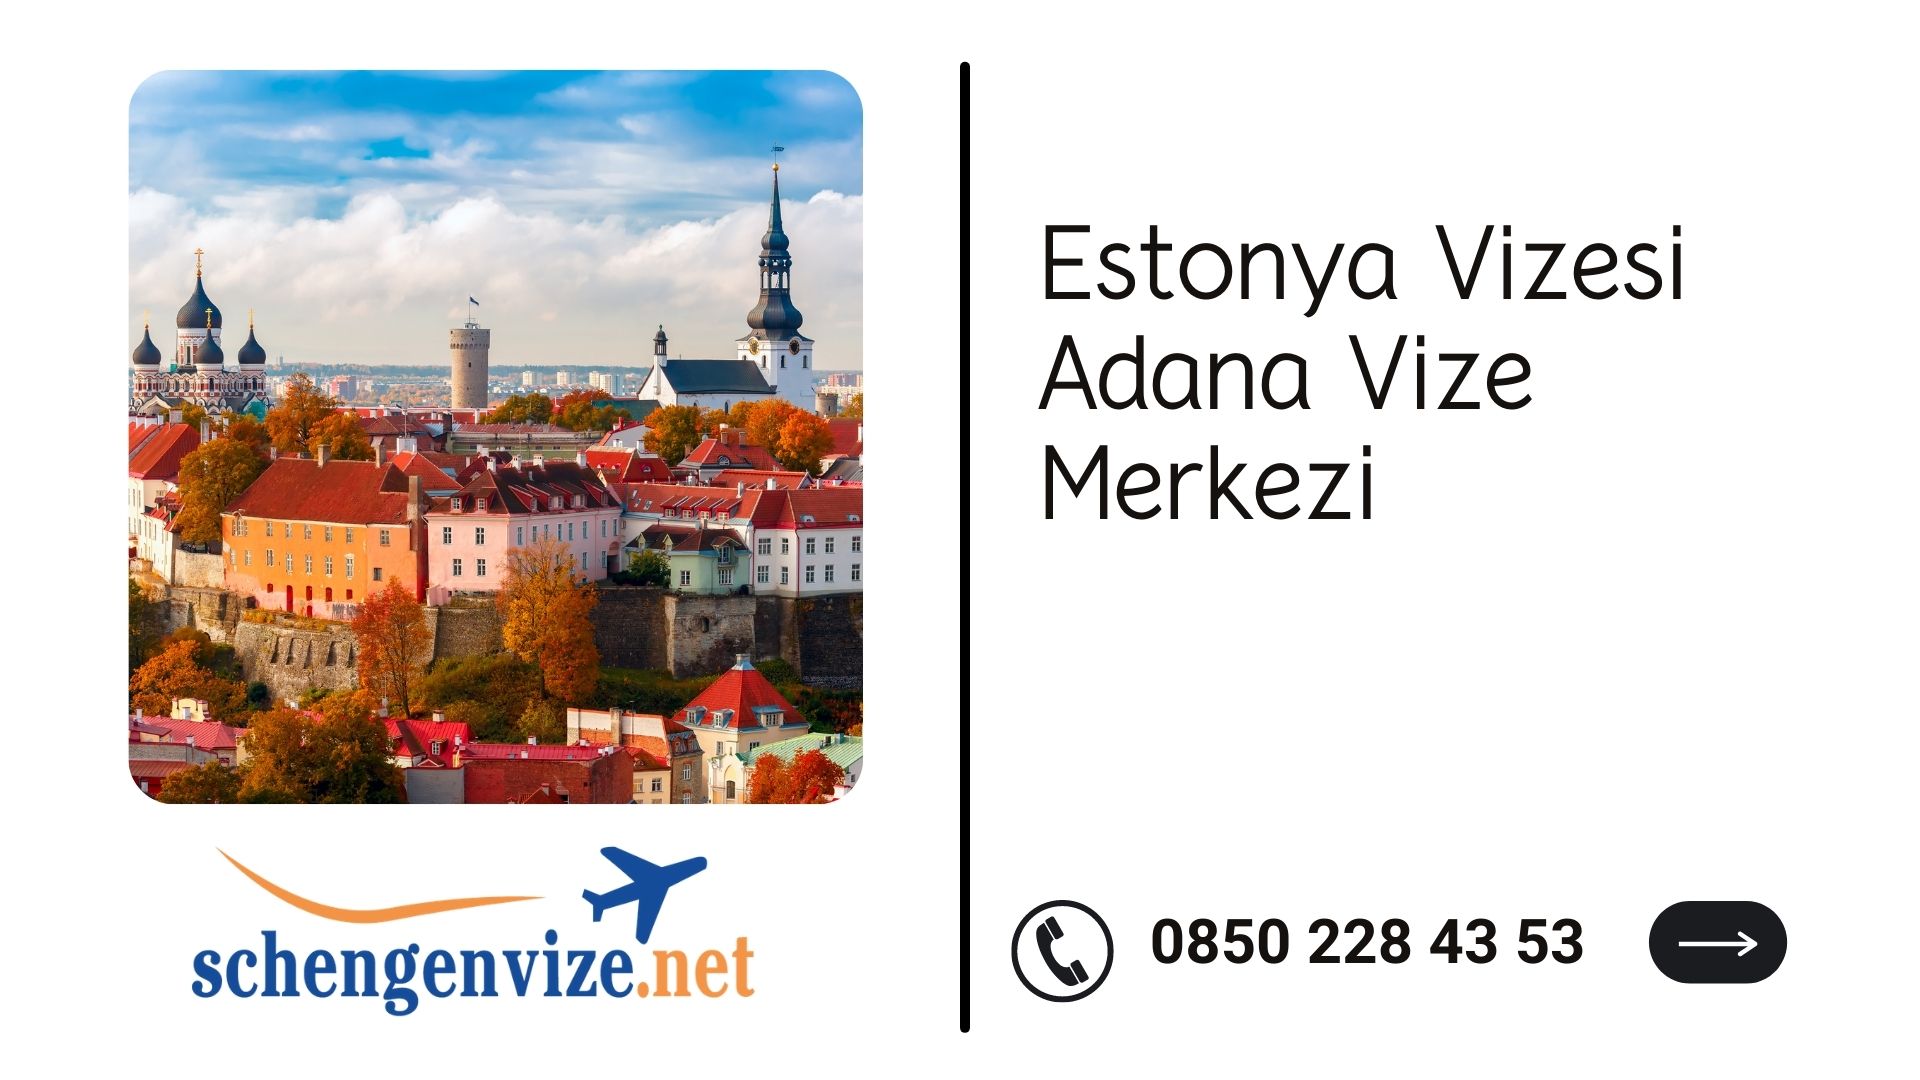 Estonya Vizesi Adana Vize Merkezi